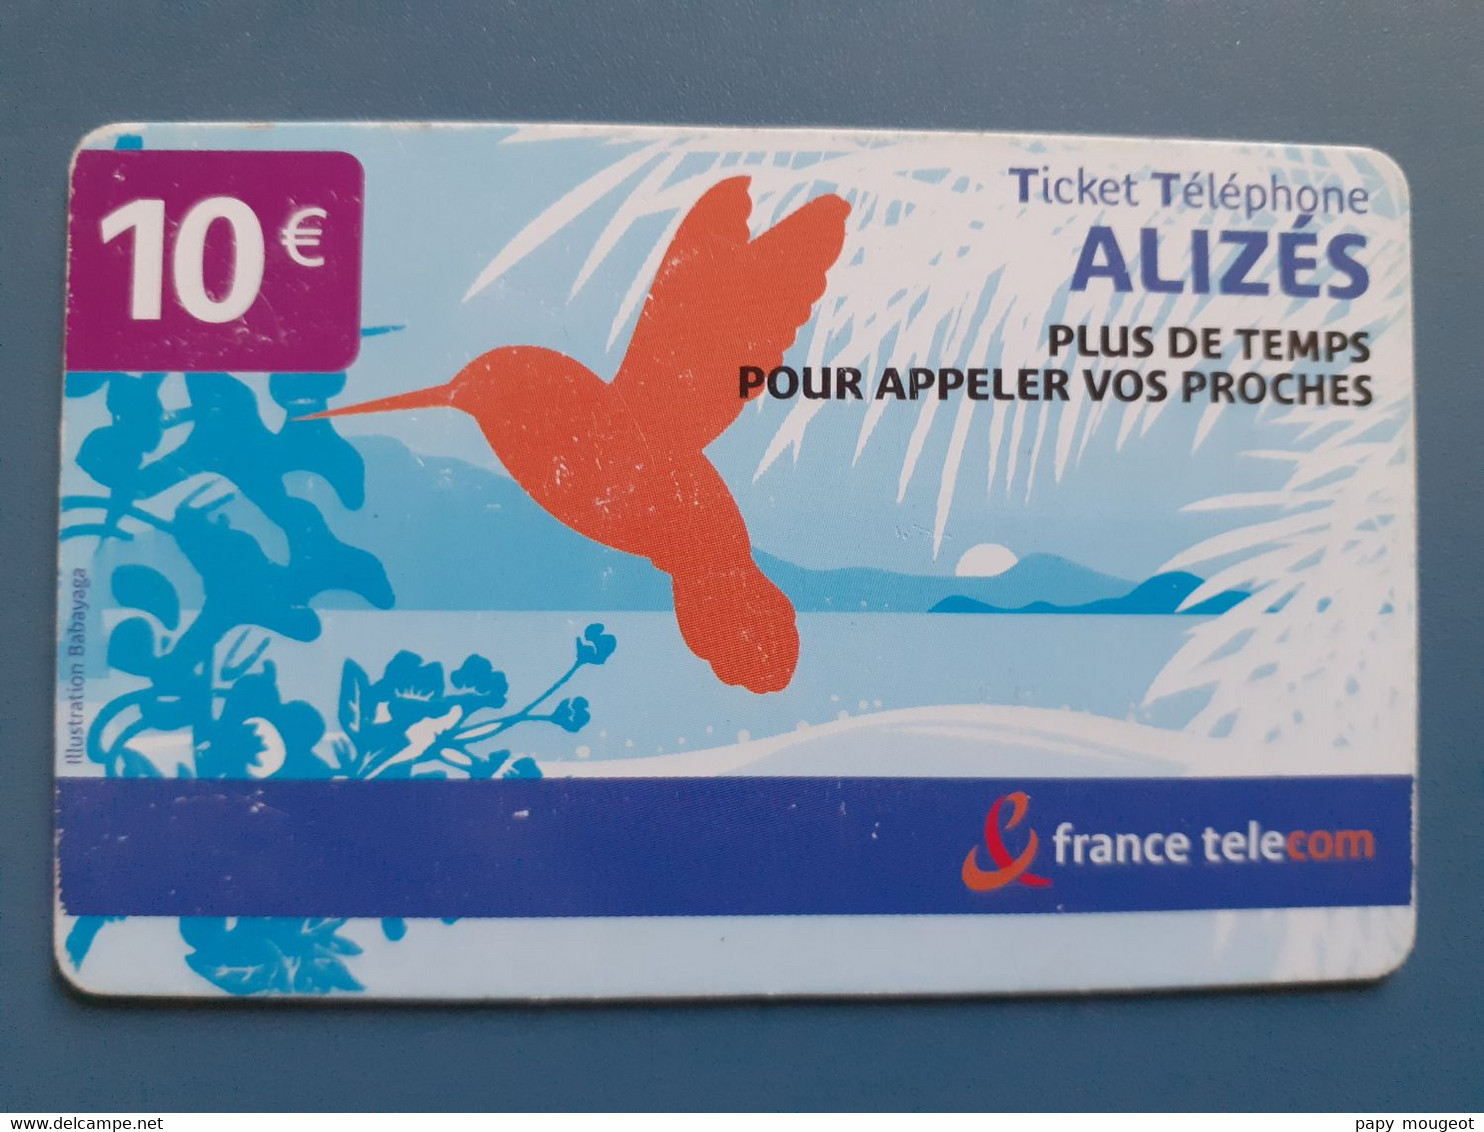 Ticket Téléphone Alizés France Télécom 10€ Validité 31/01/2008 - Série W 58350026346 - Tickets FT